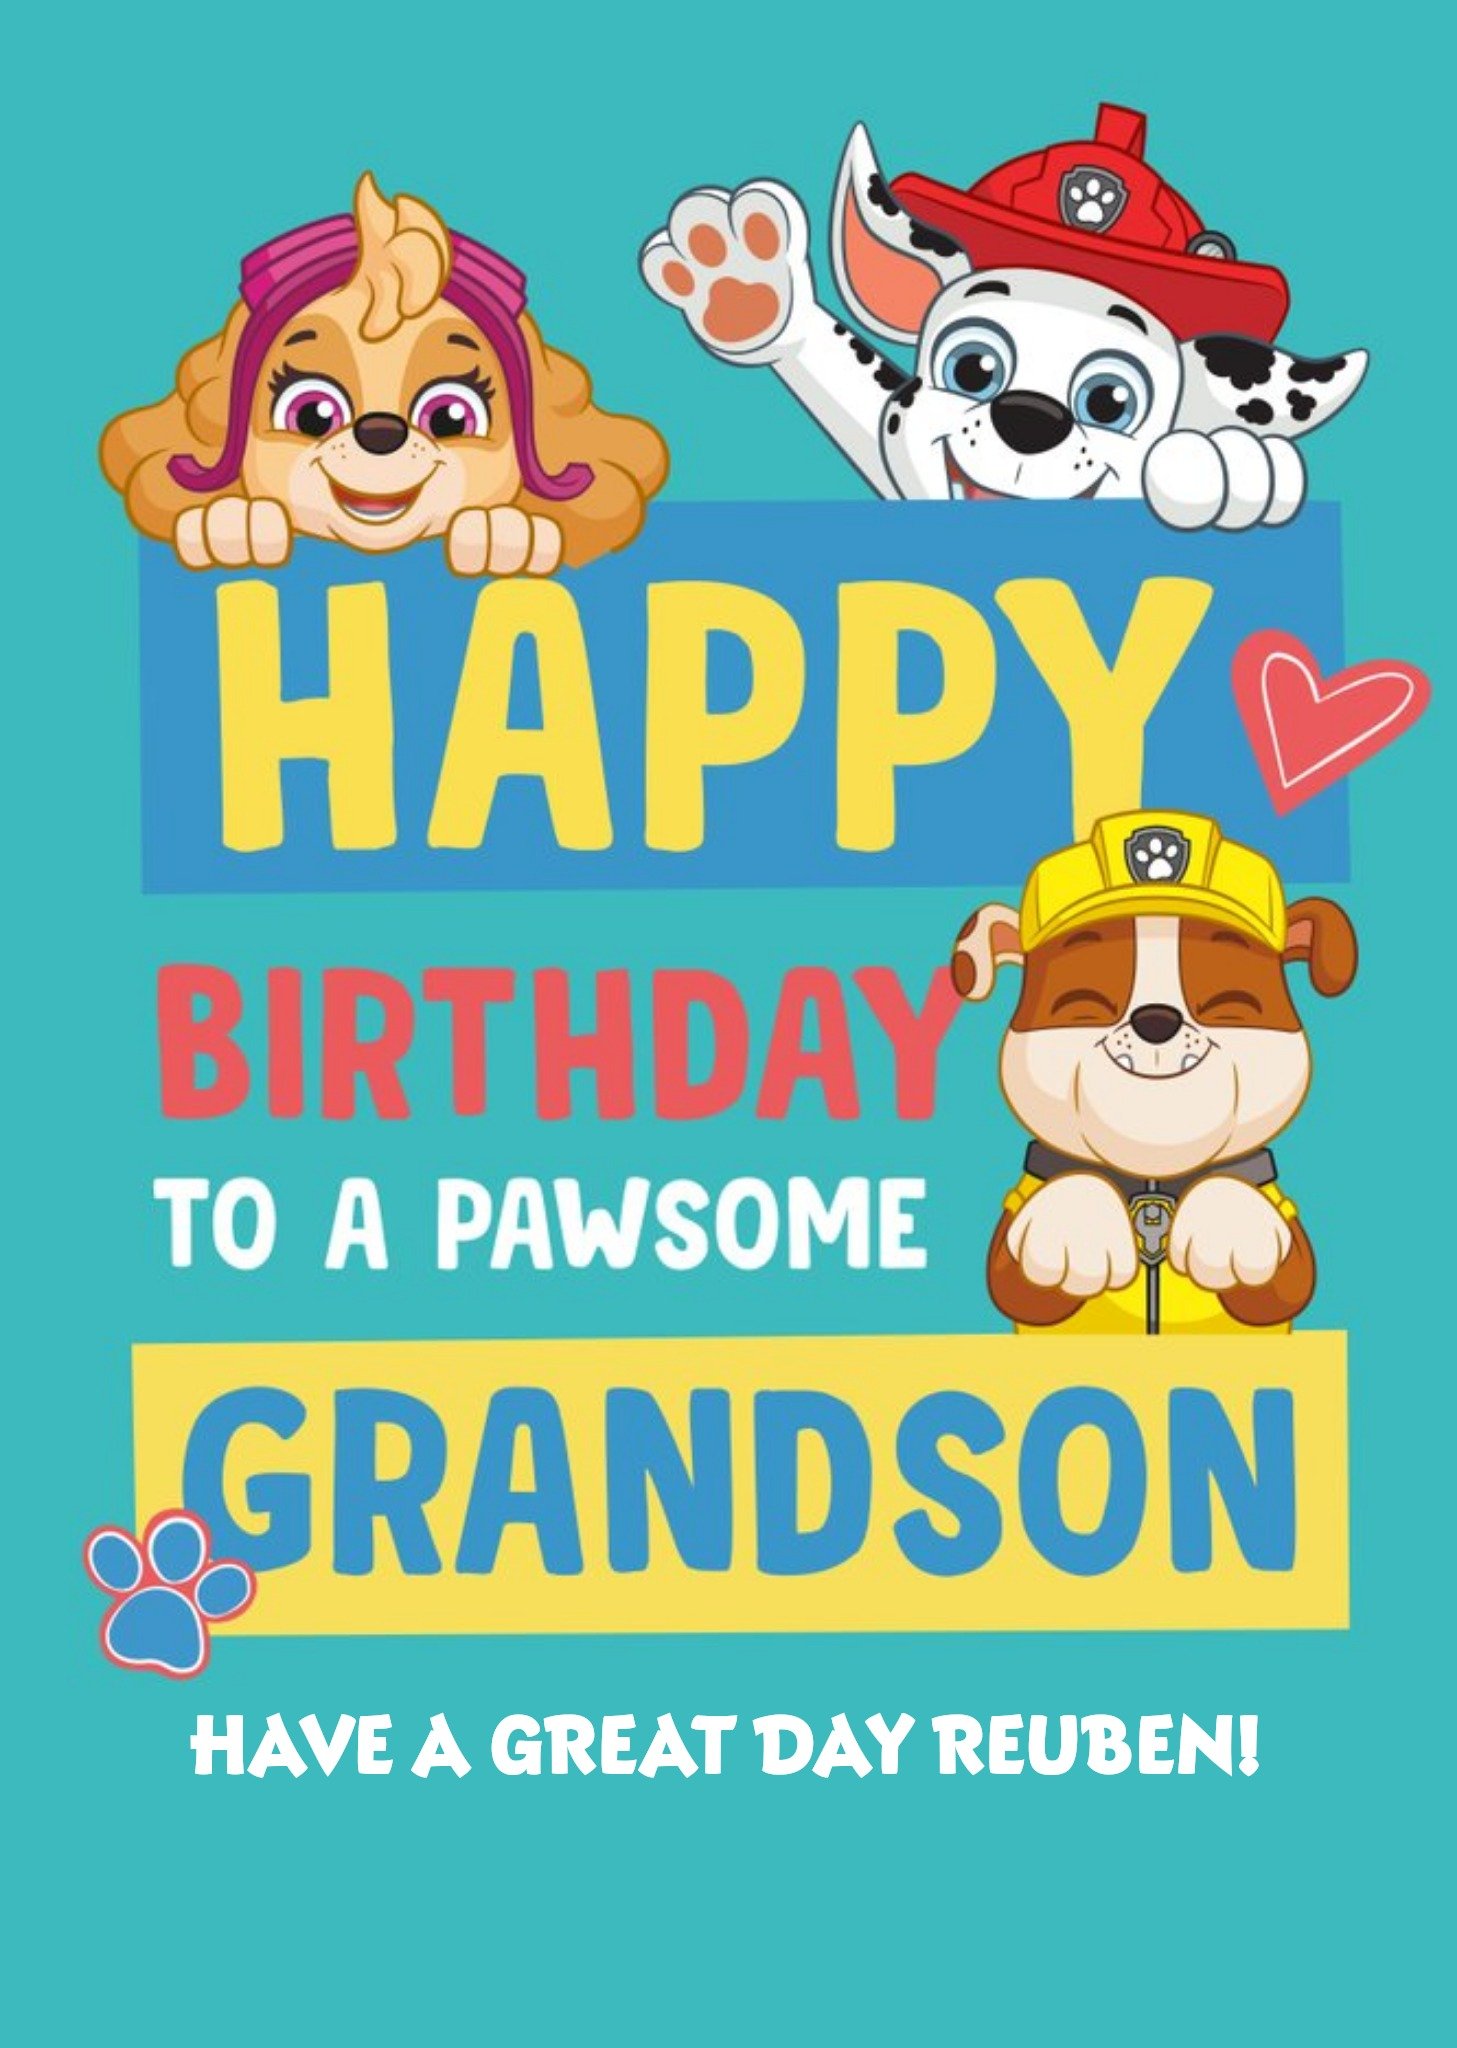 Paw Patrol Pawsome Grandson Birthday Card, Large